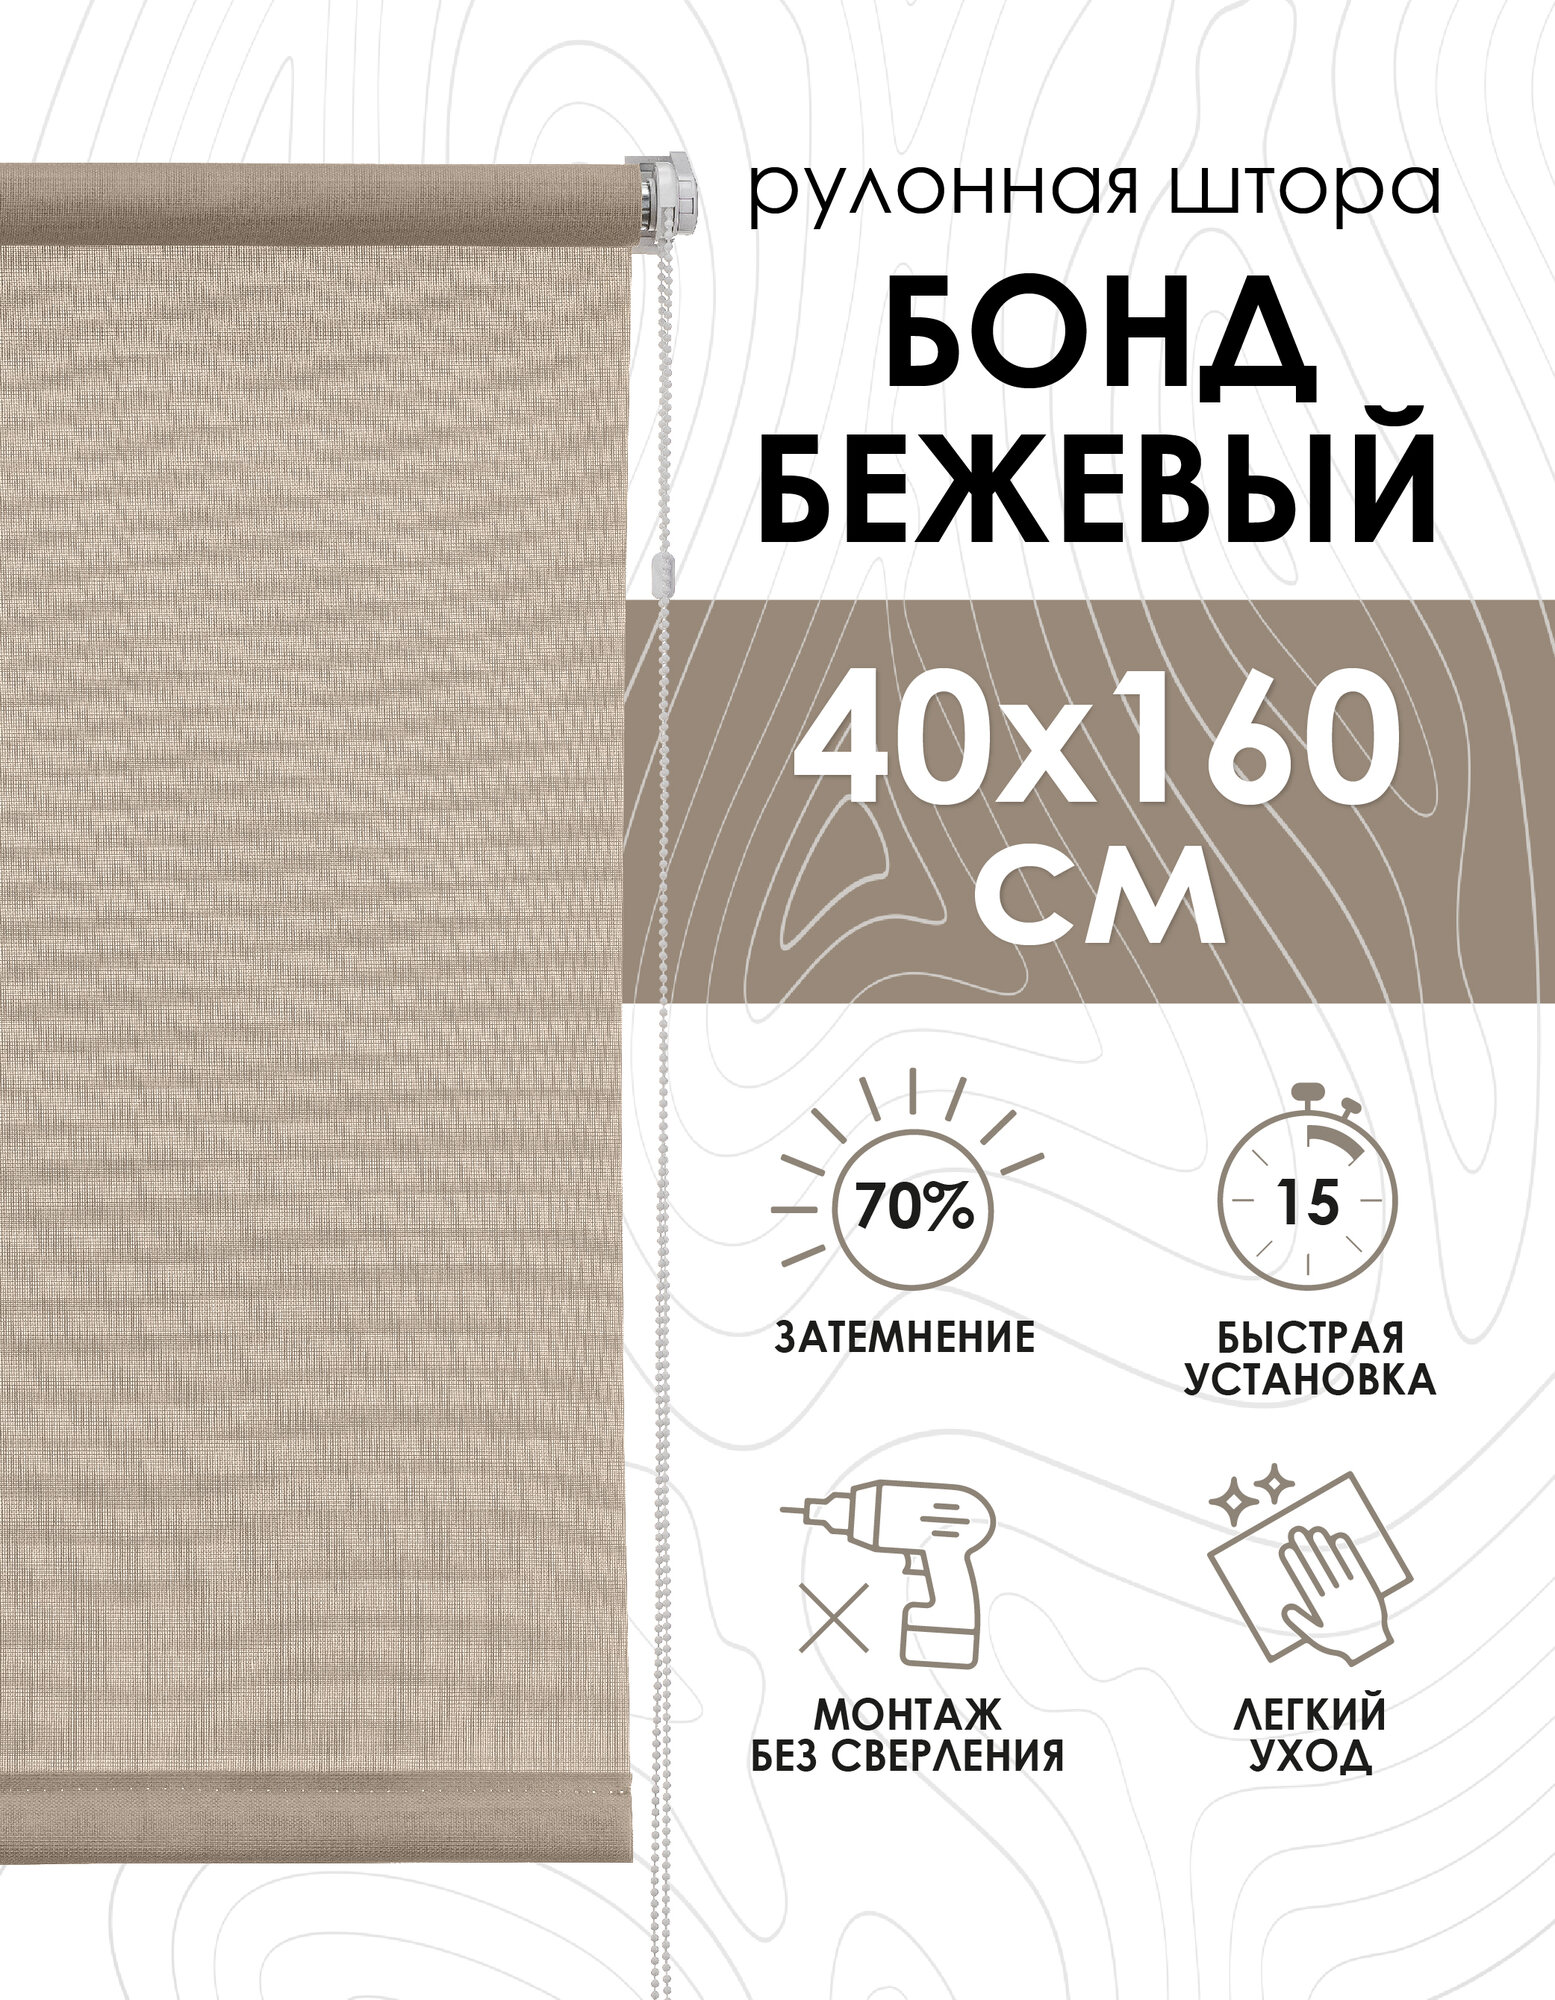 Рулонные шторы, Бонд, Бежевый, 40х160 см